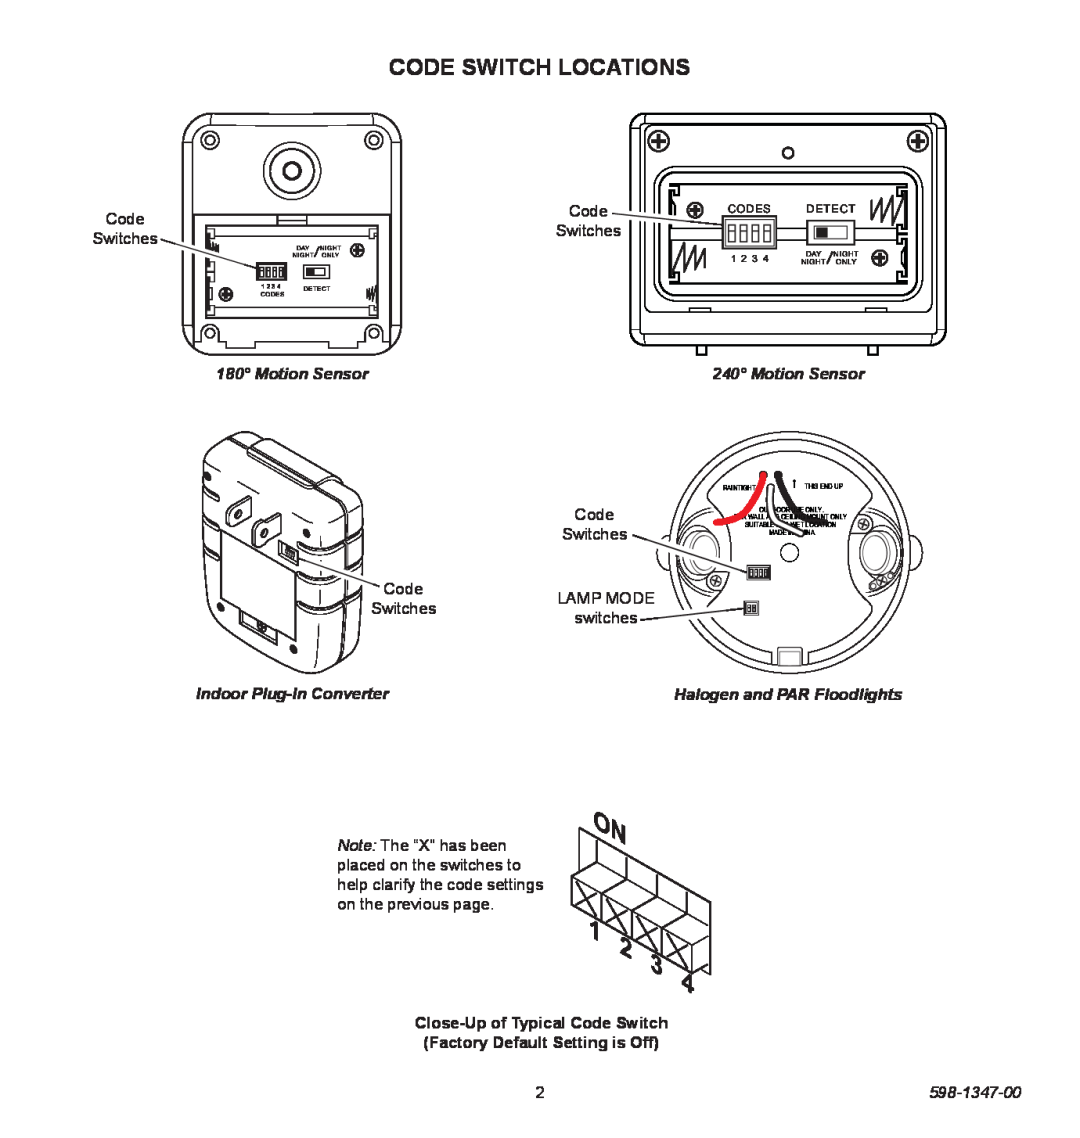 Heath Zenith 598-1347-00 Code Switch Locations, Motion Sensor, Indoor Plug-InConverter, Halogen and PAR Floodlights, Codes 